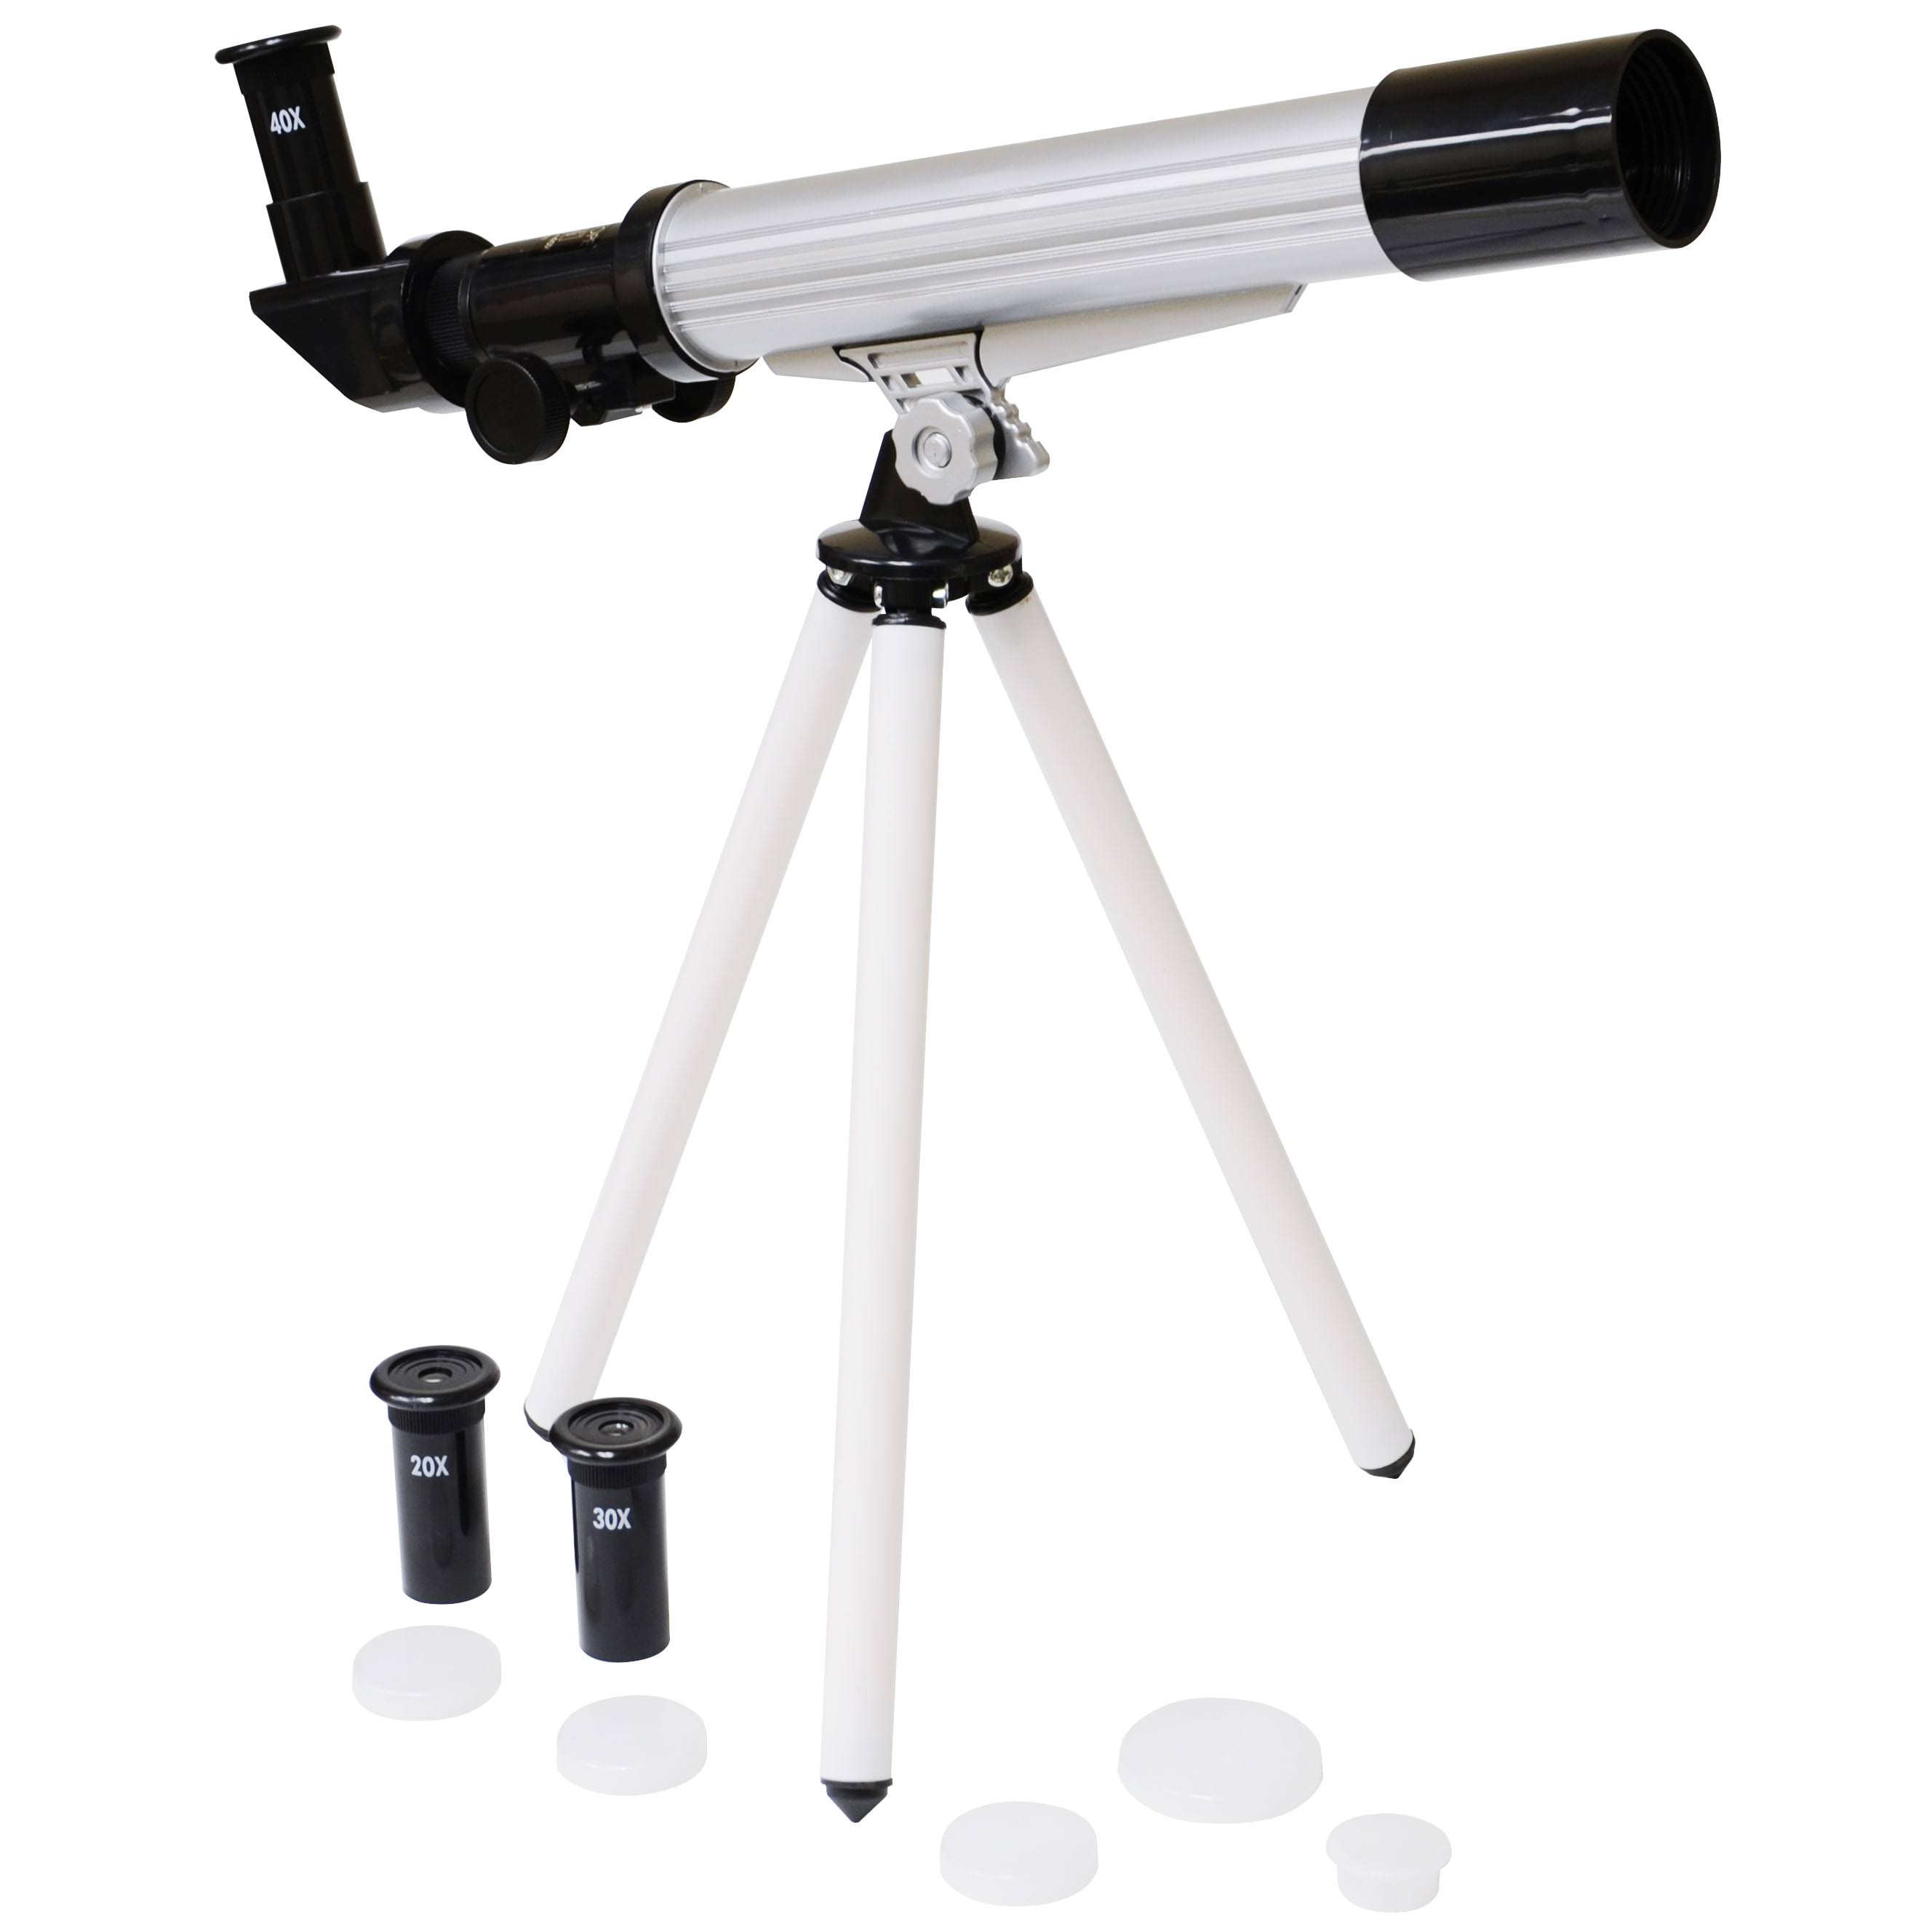 Elenco Mobile 20/30/40x Telescope